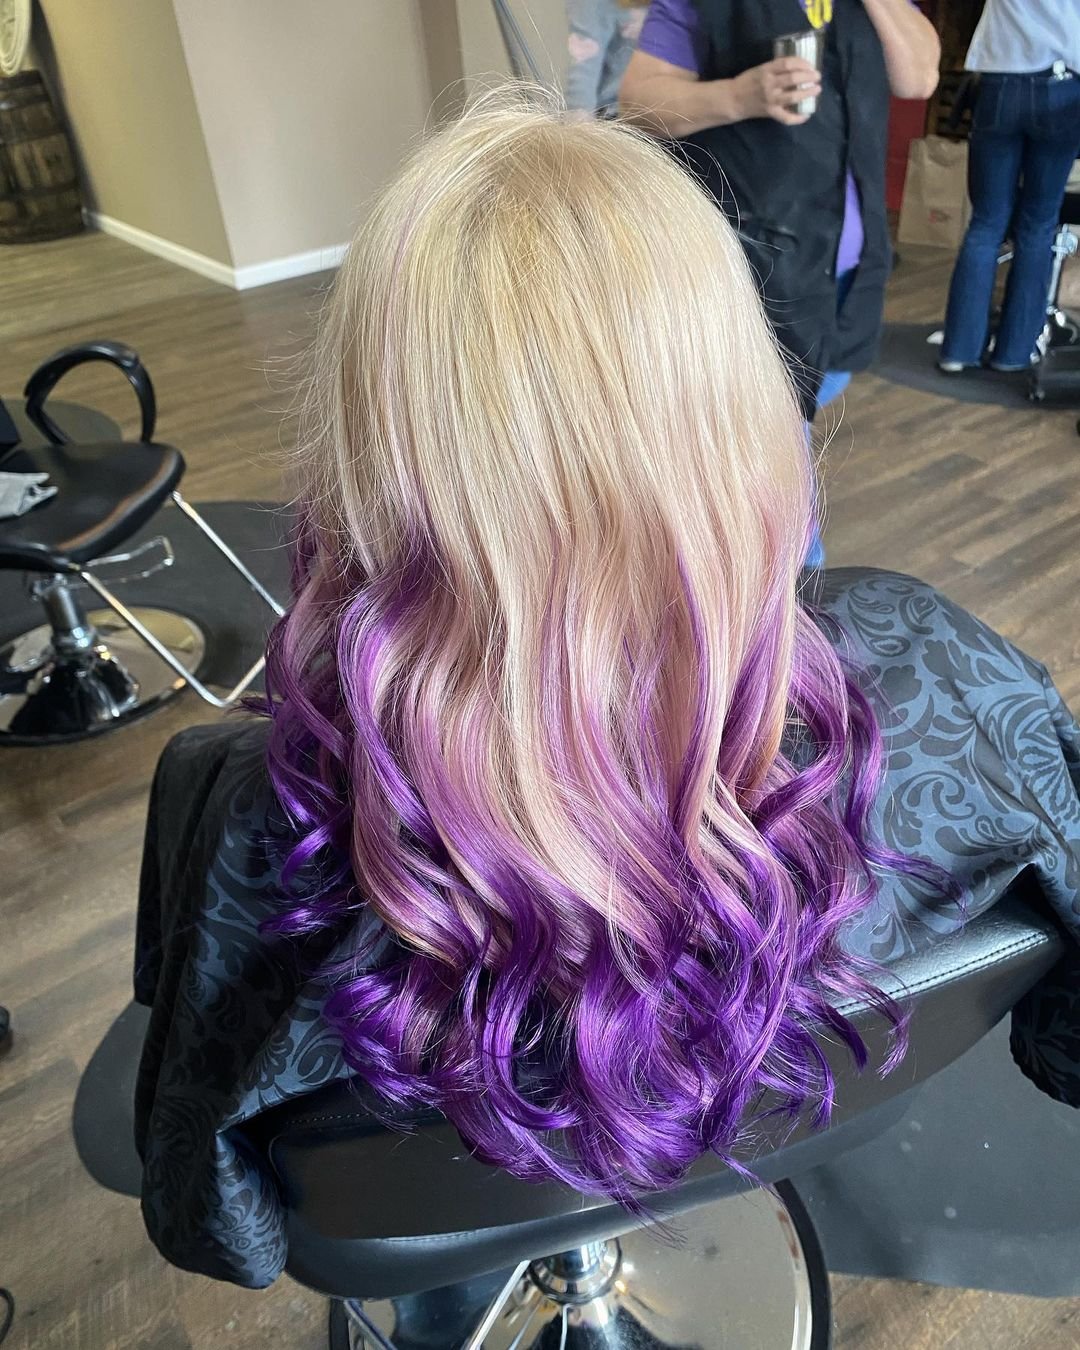 Medium/Long Purple Ombre Hair